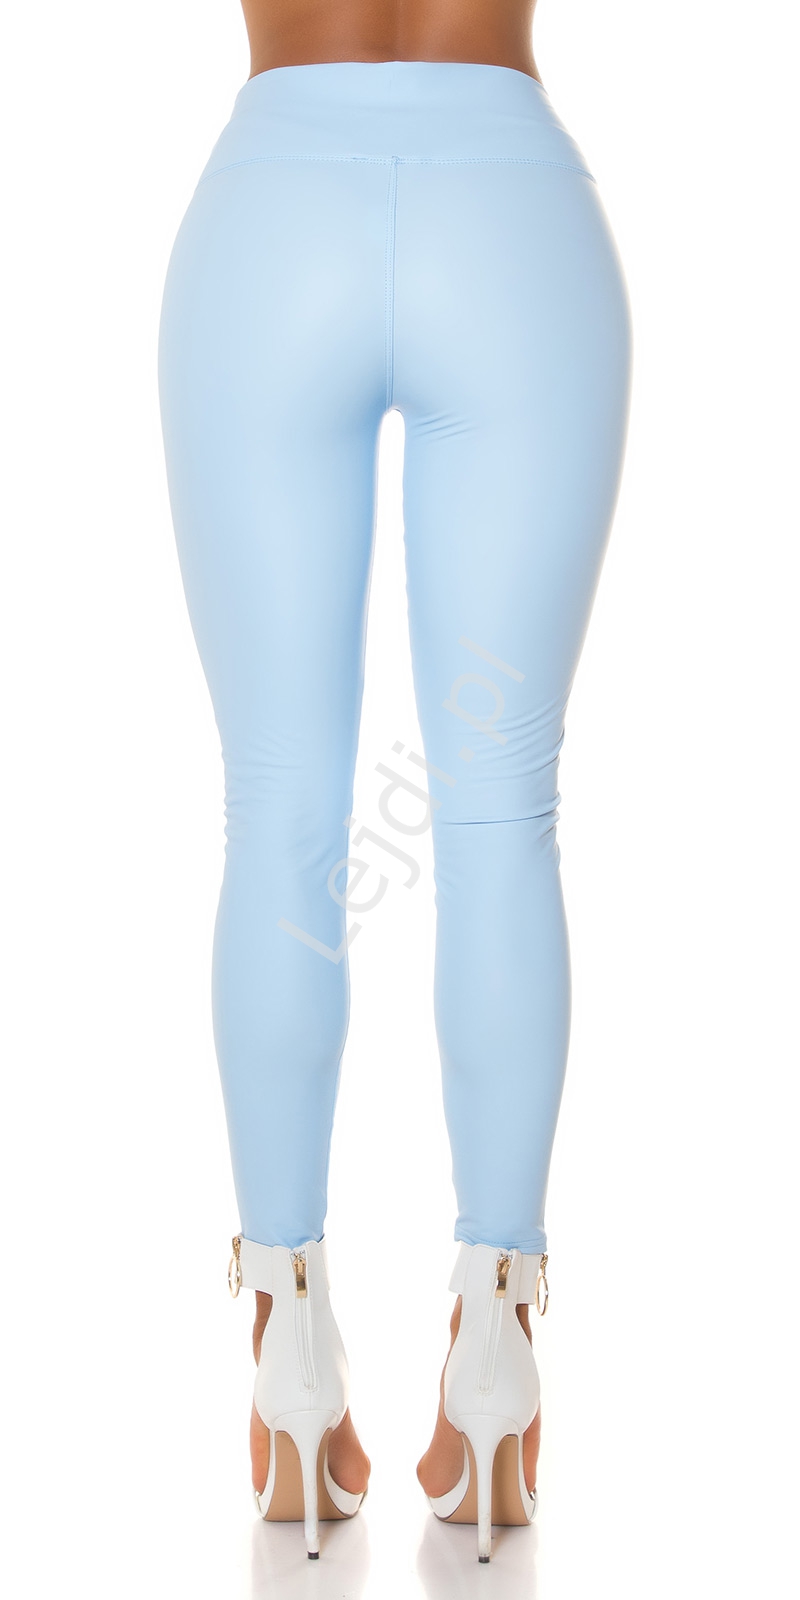 Błękitne spodnie damskie z ekoskórki, legginsy 2048